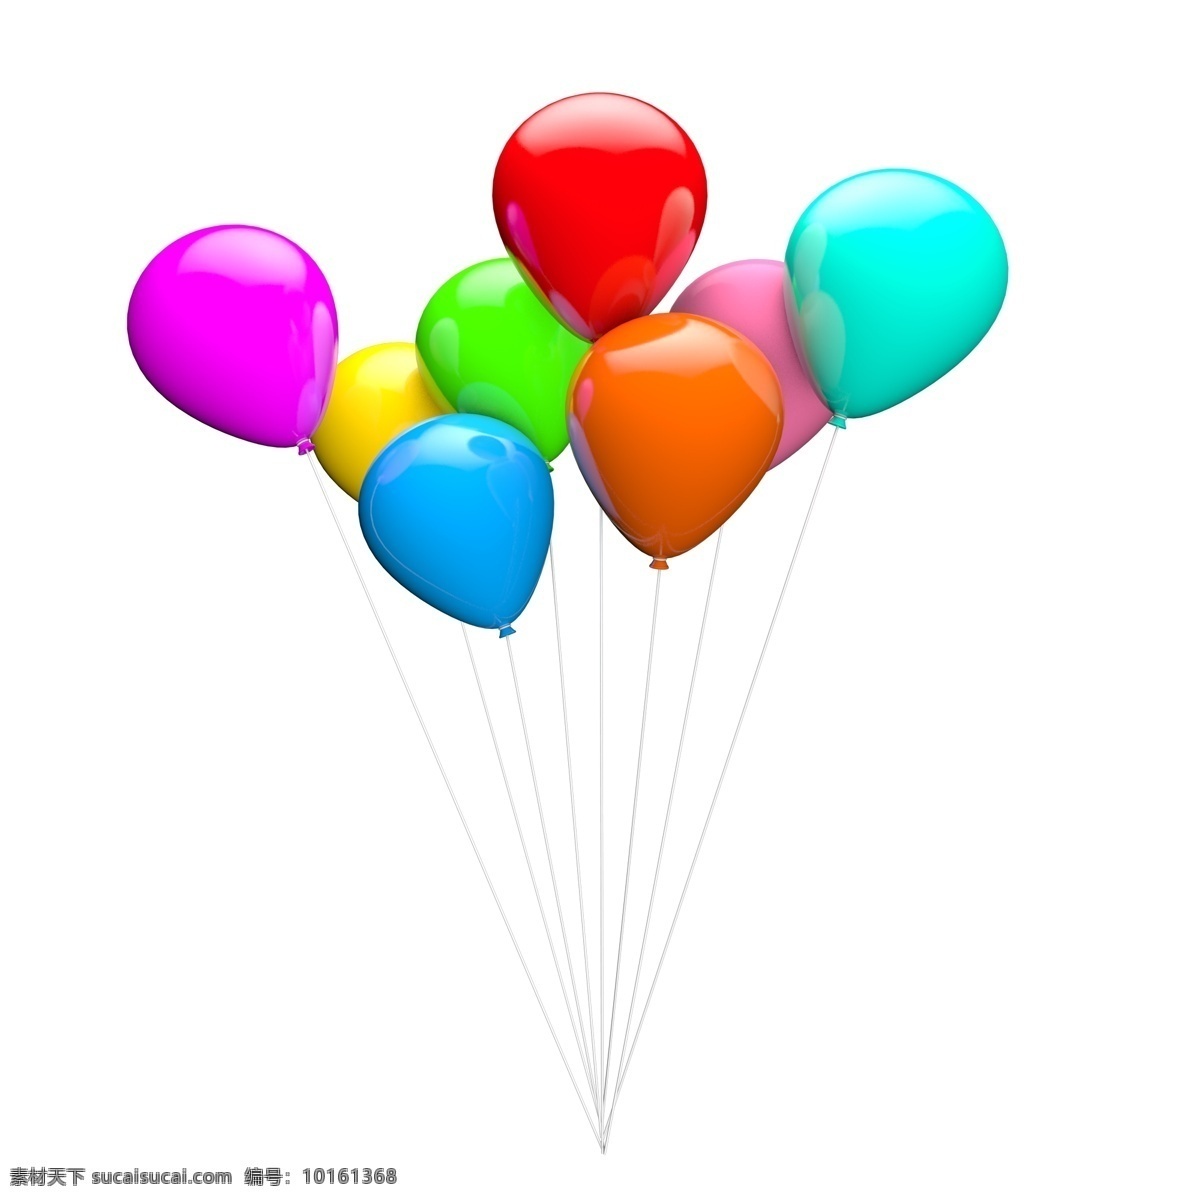 c4d 彩色 漂浮 气球 氢气球 节日 喜庆